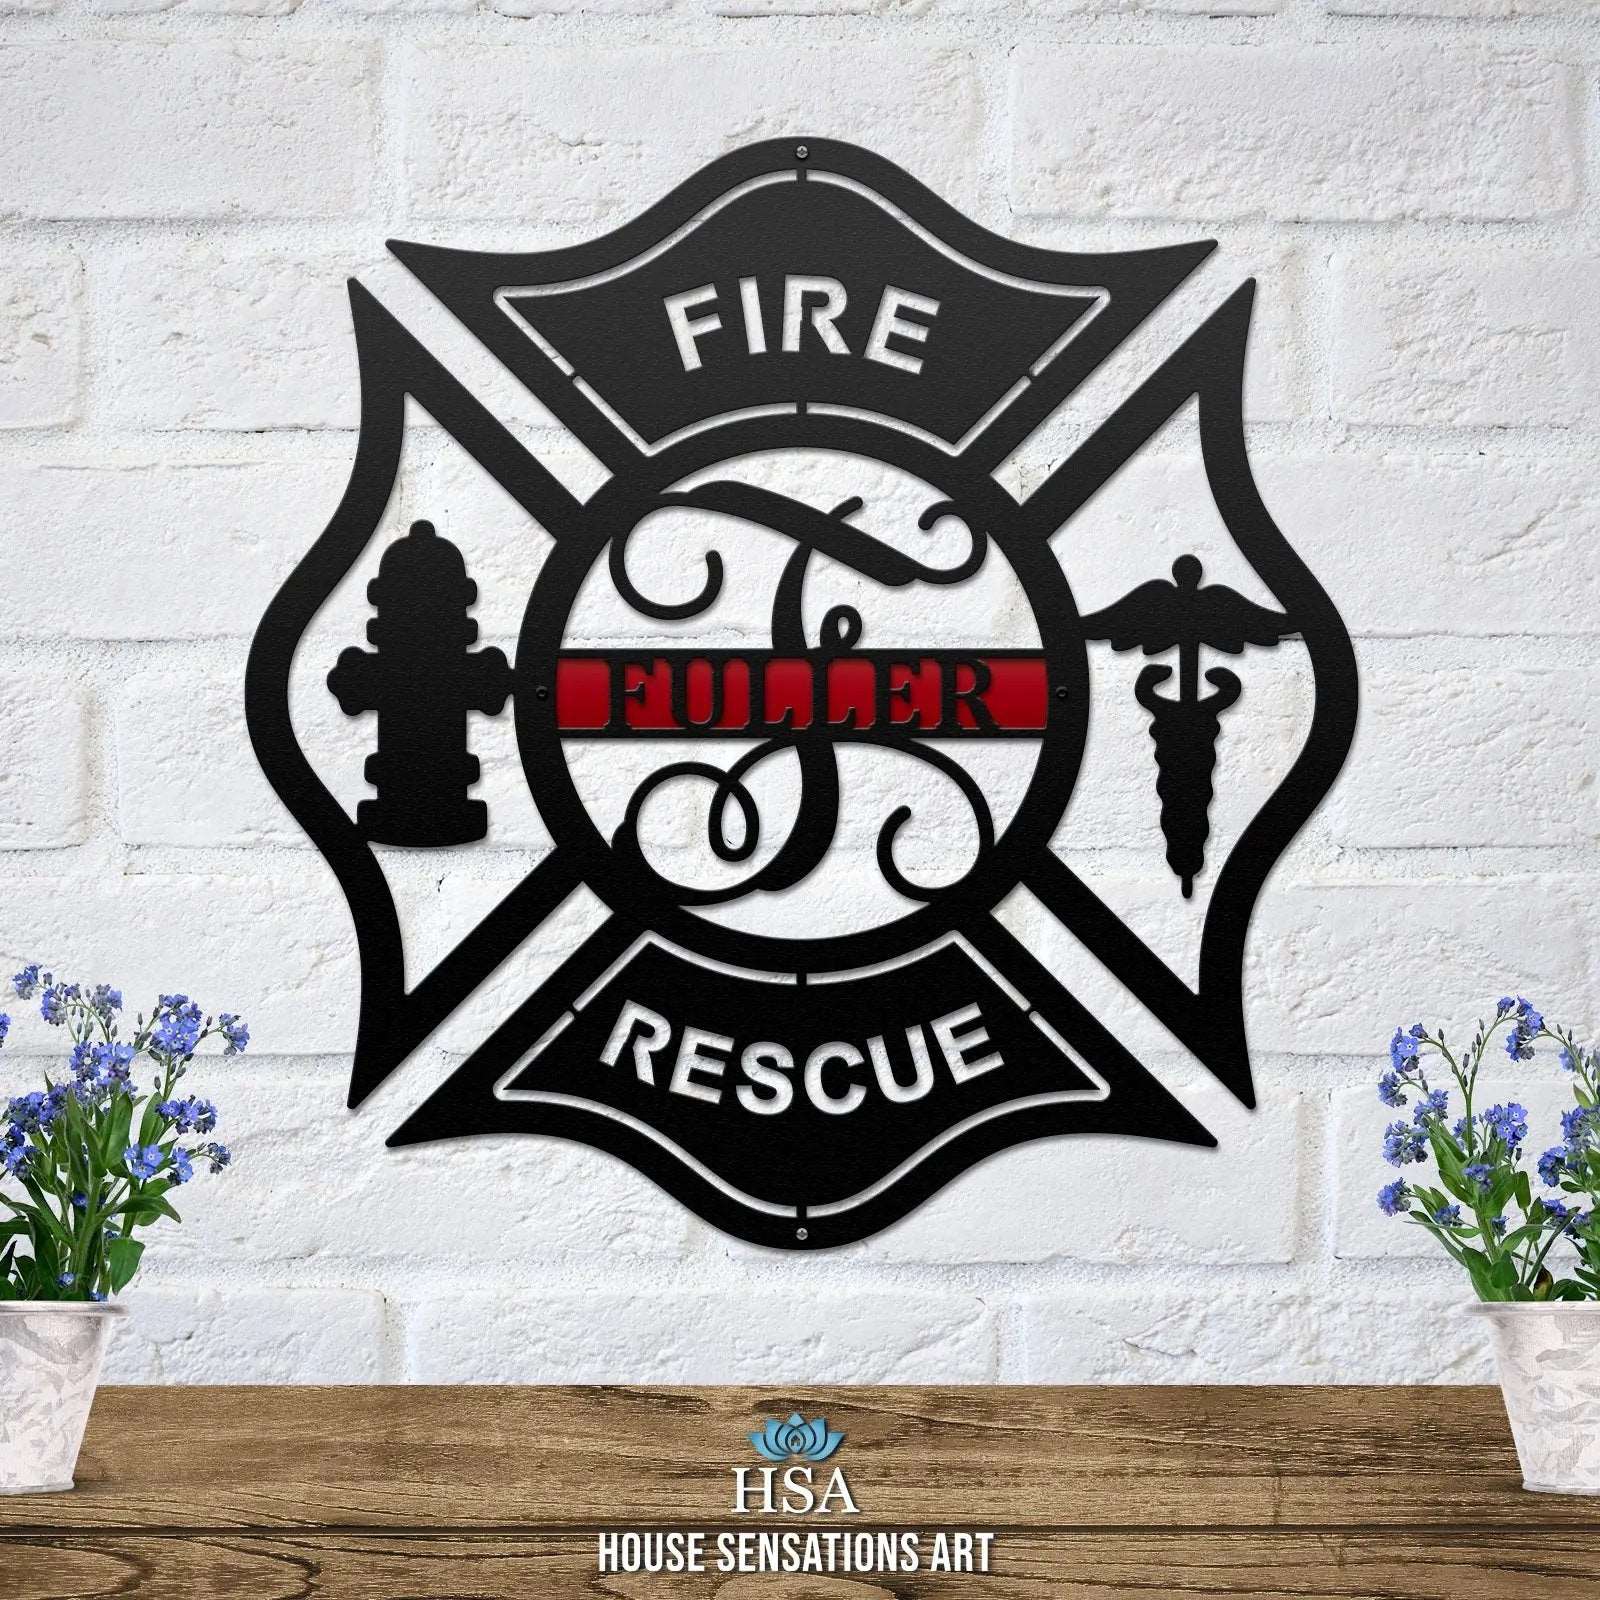 Firefighter Metal Maltese Cross Sign Americana Sign House Sensations Art   